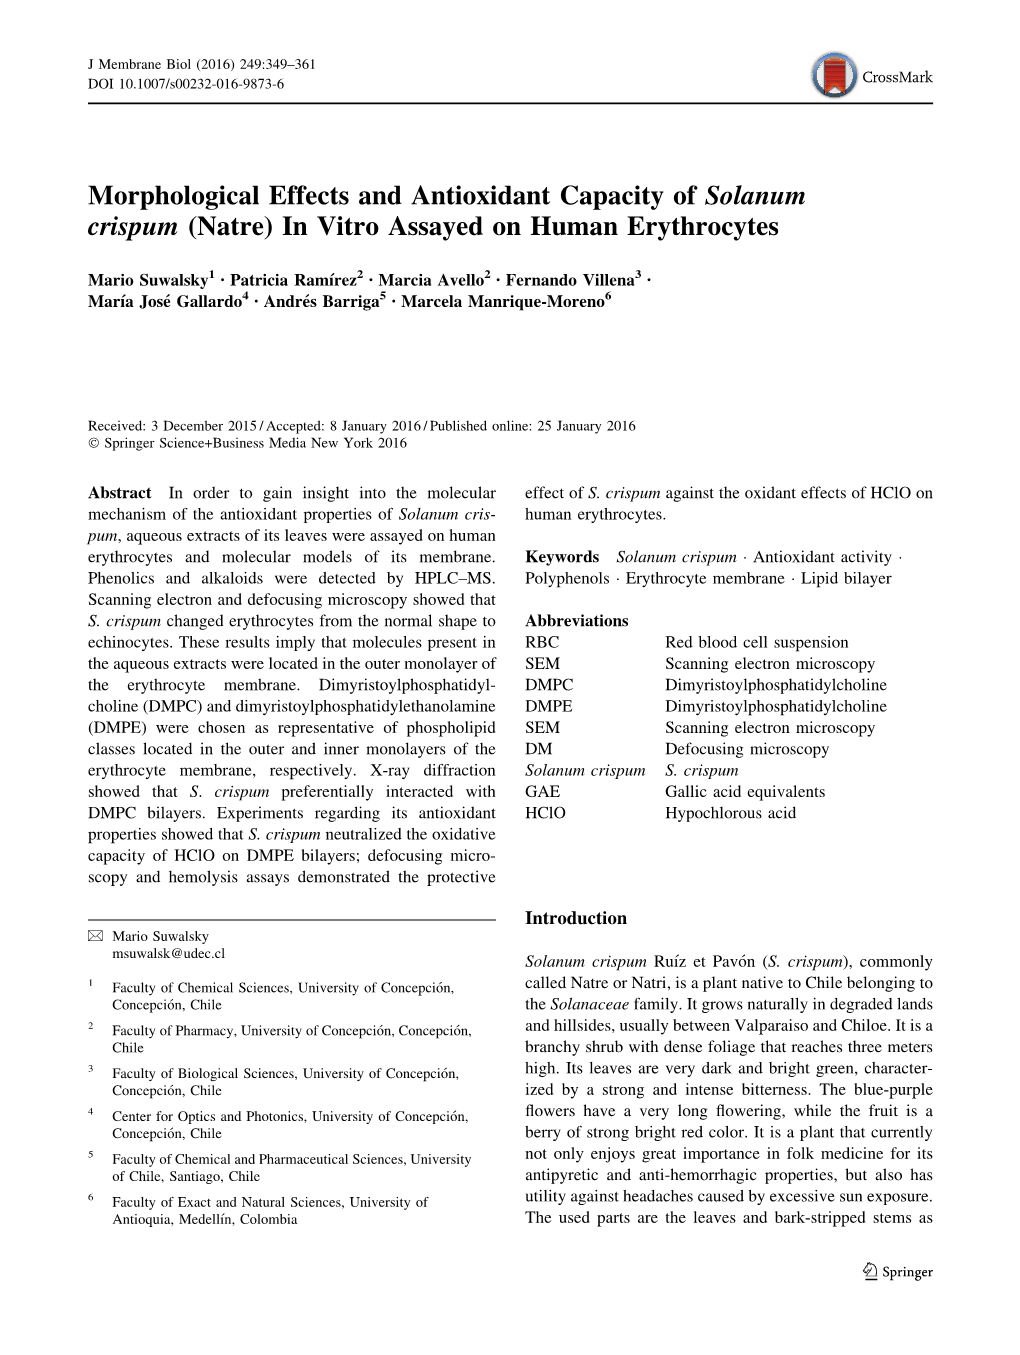 Morphological Effects and Antioxidant Capacity of Solanum Crispum (Natre) in Vitro Assayed on Human Erythrocytes